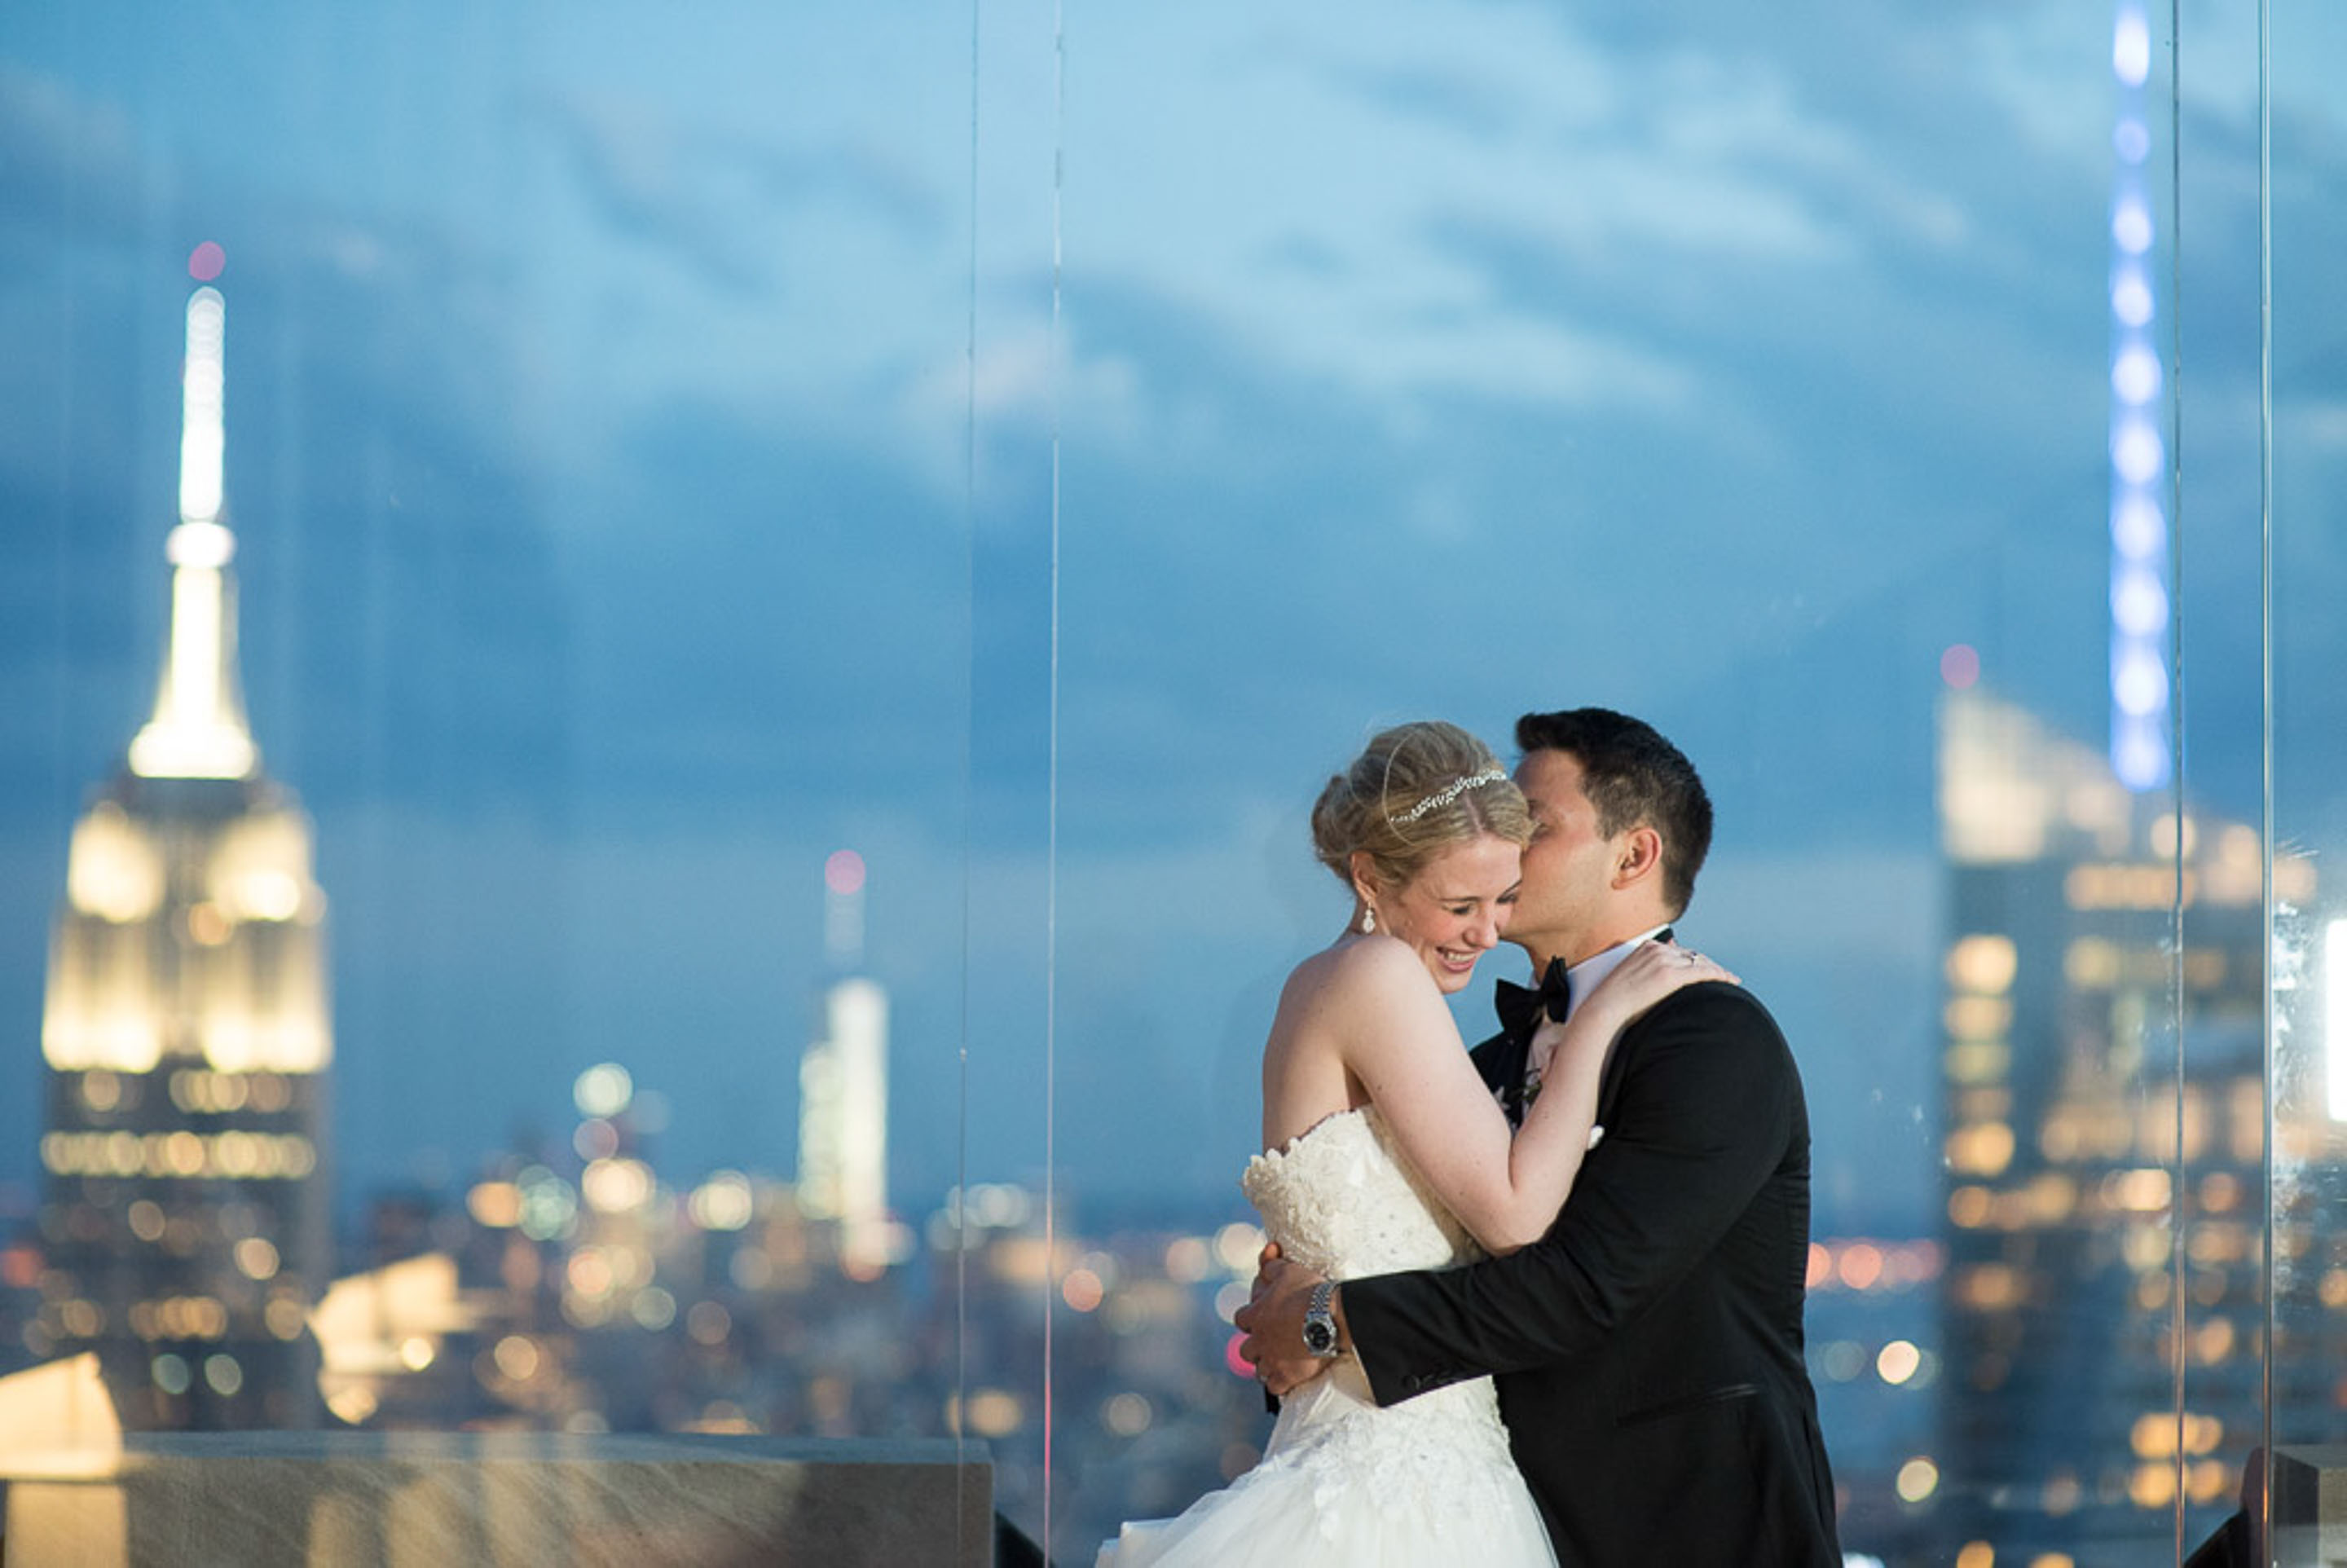 Wedding Event Photography - 5th Avenue Digital